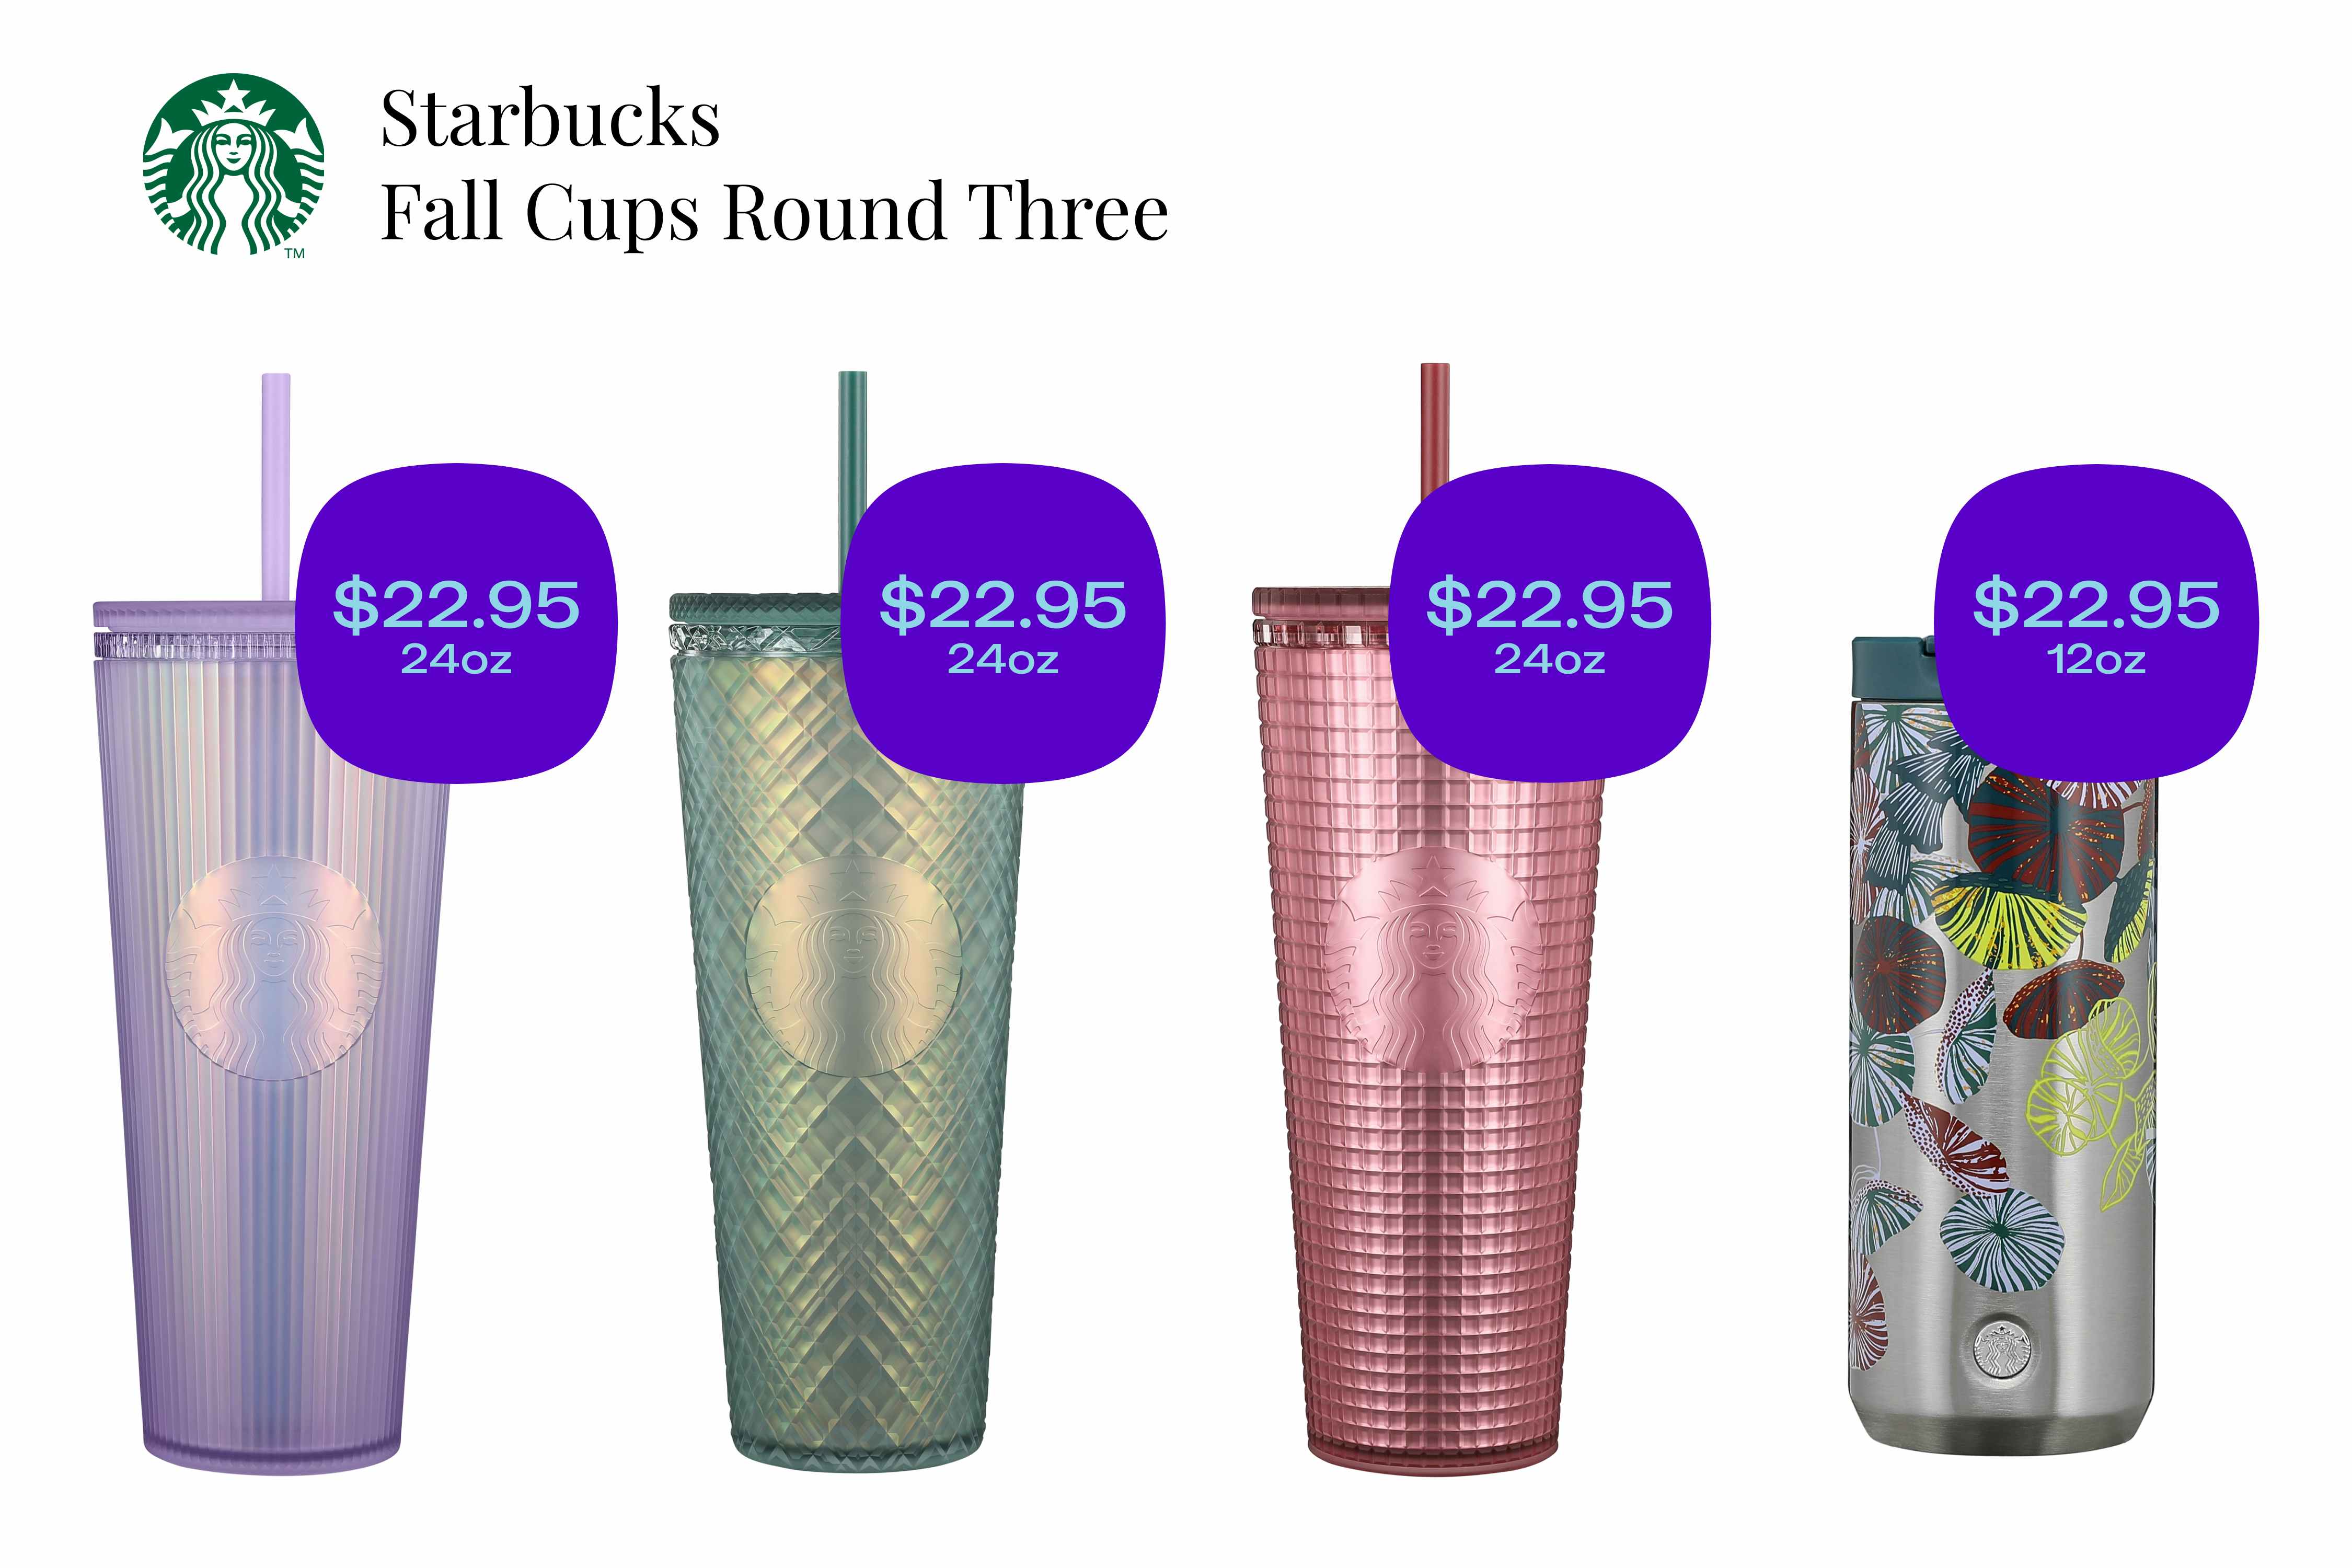 Starbucks Fall Cups Round 3 graphic.